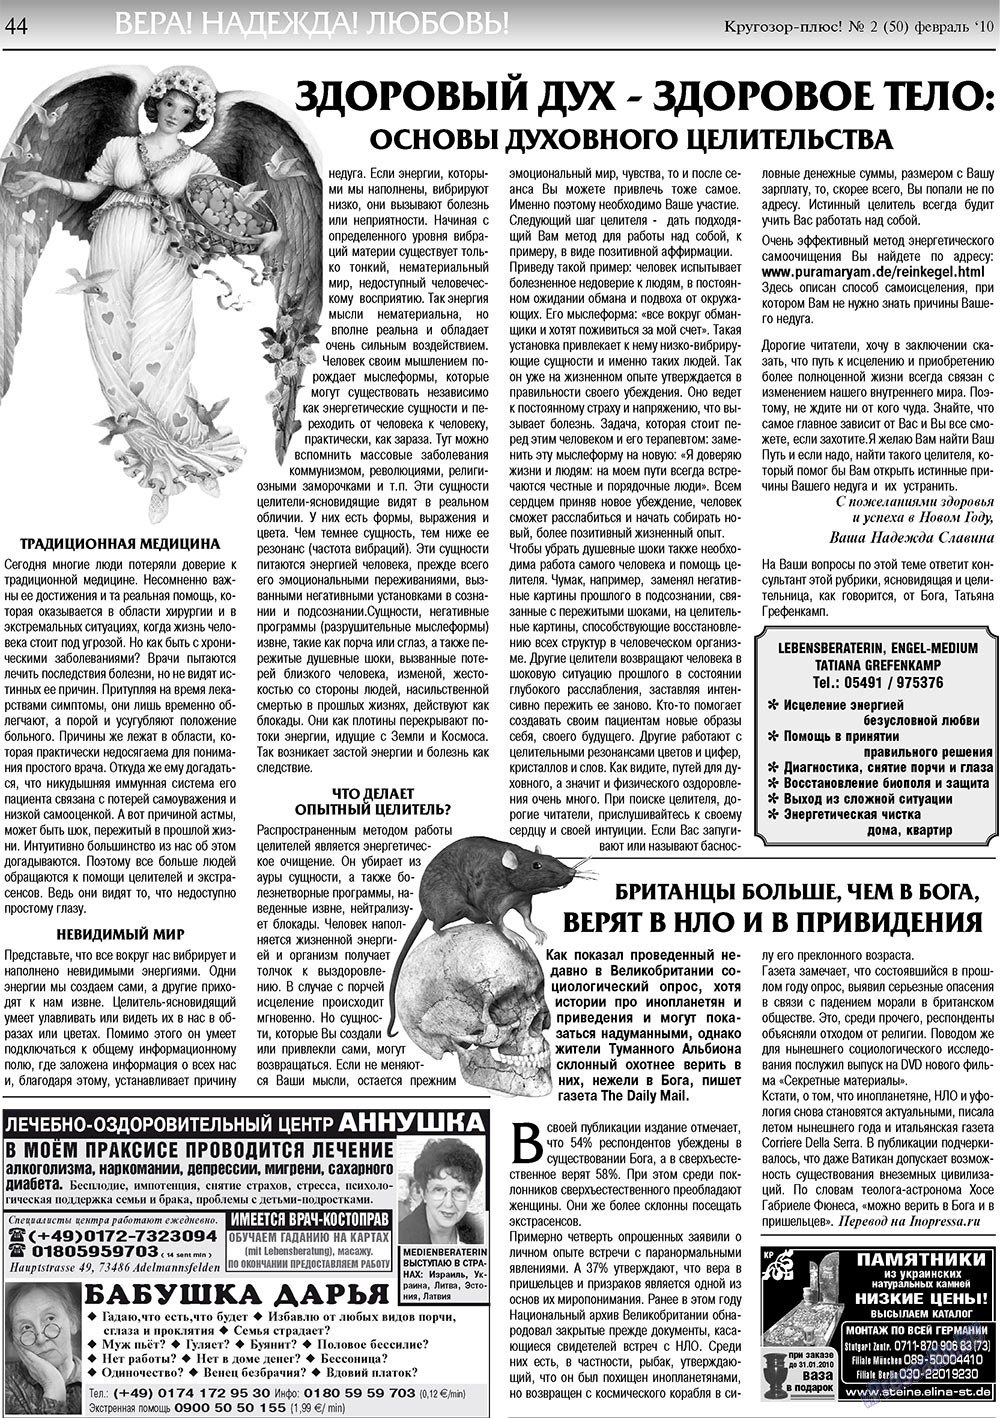 Кругозор плюс! (газета). 2010 год, номер 2, стр. 46